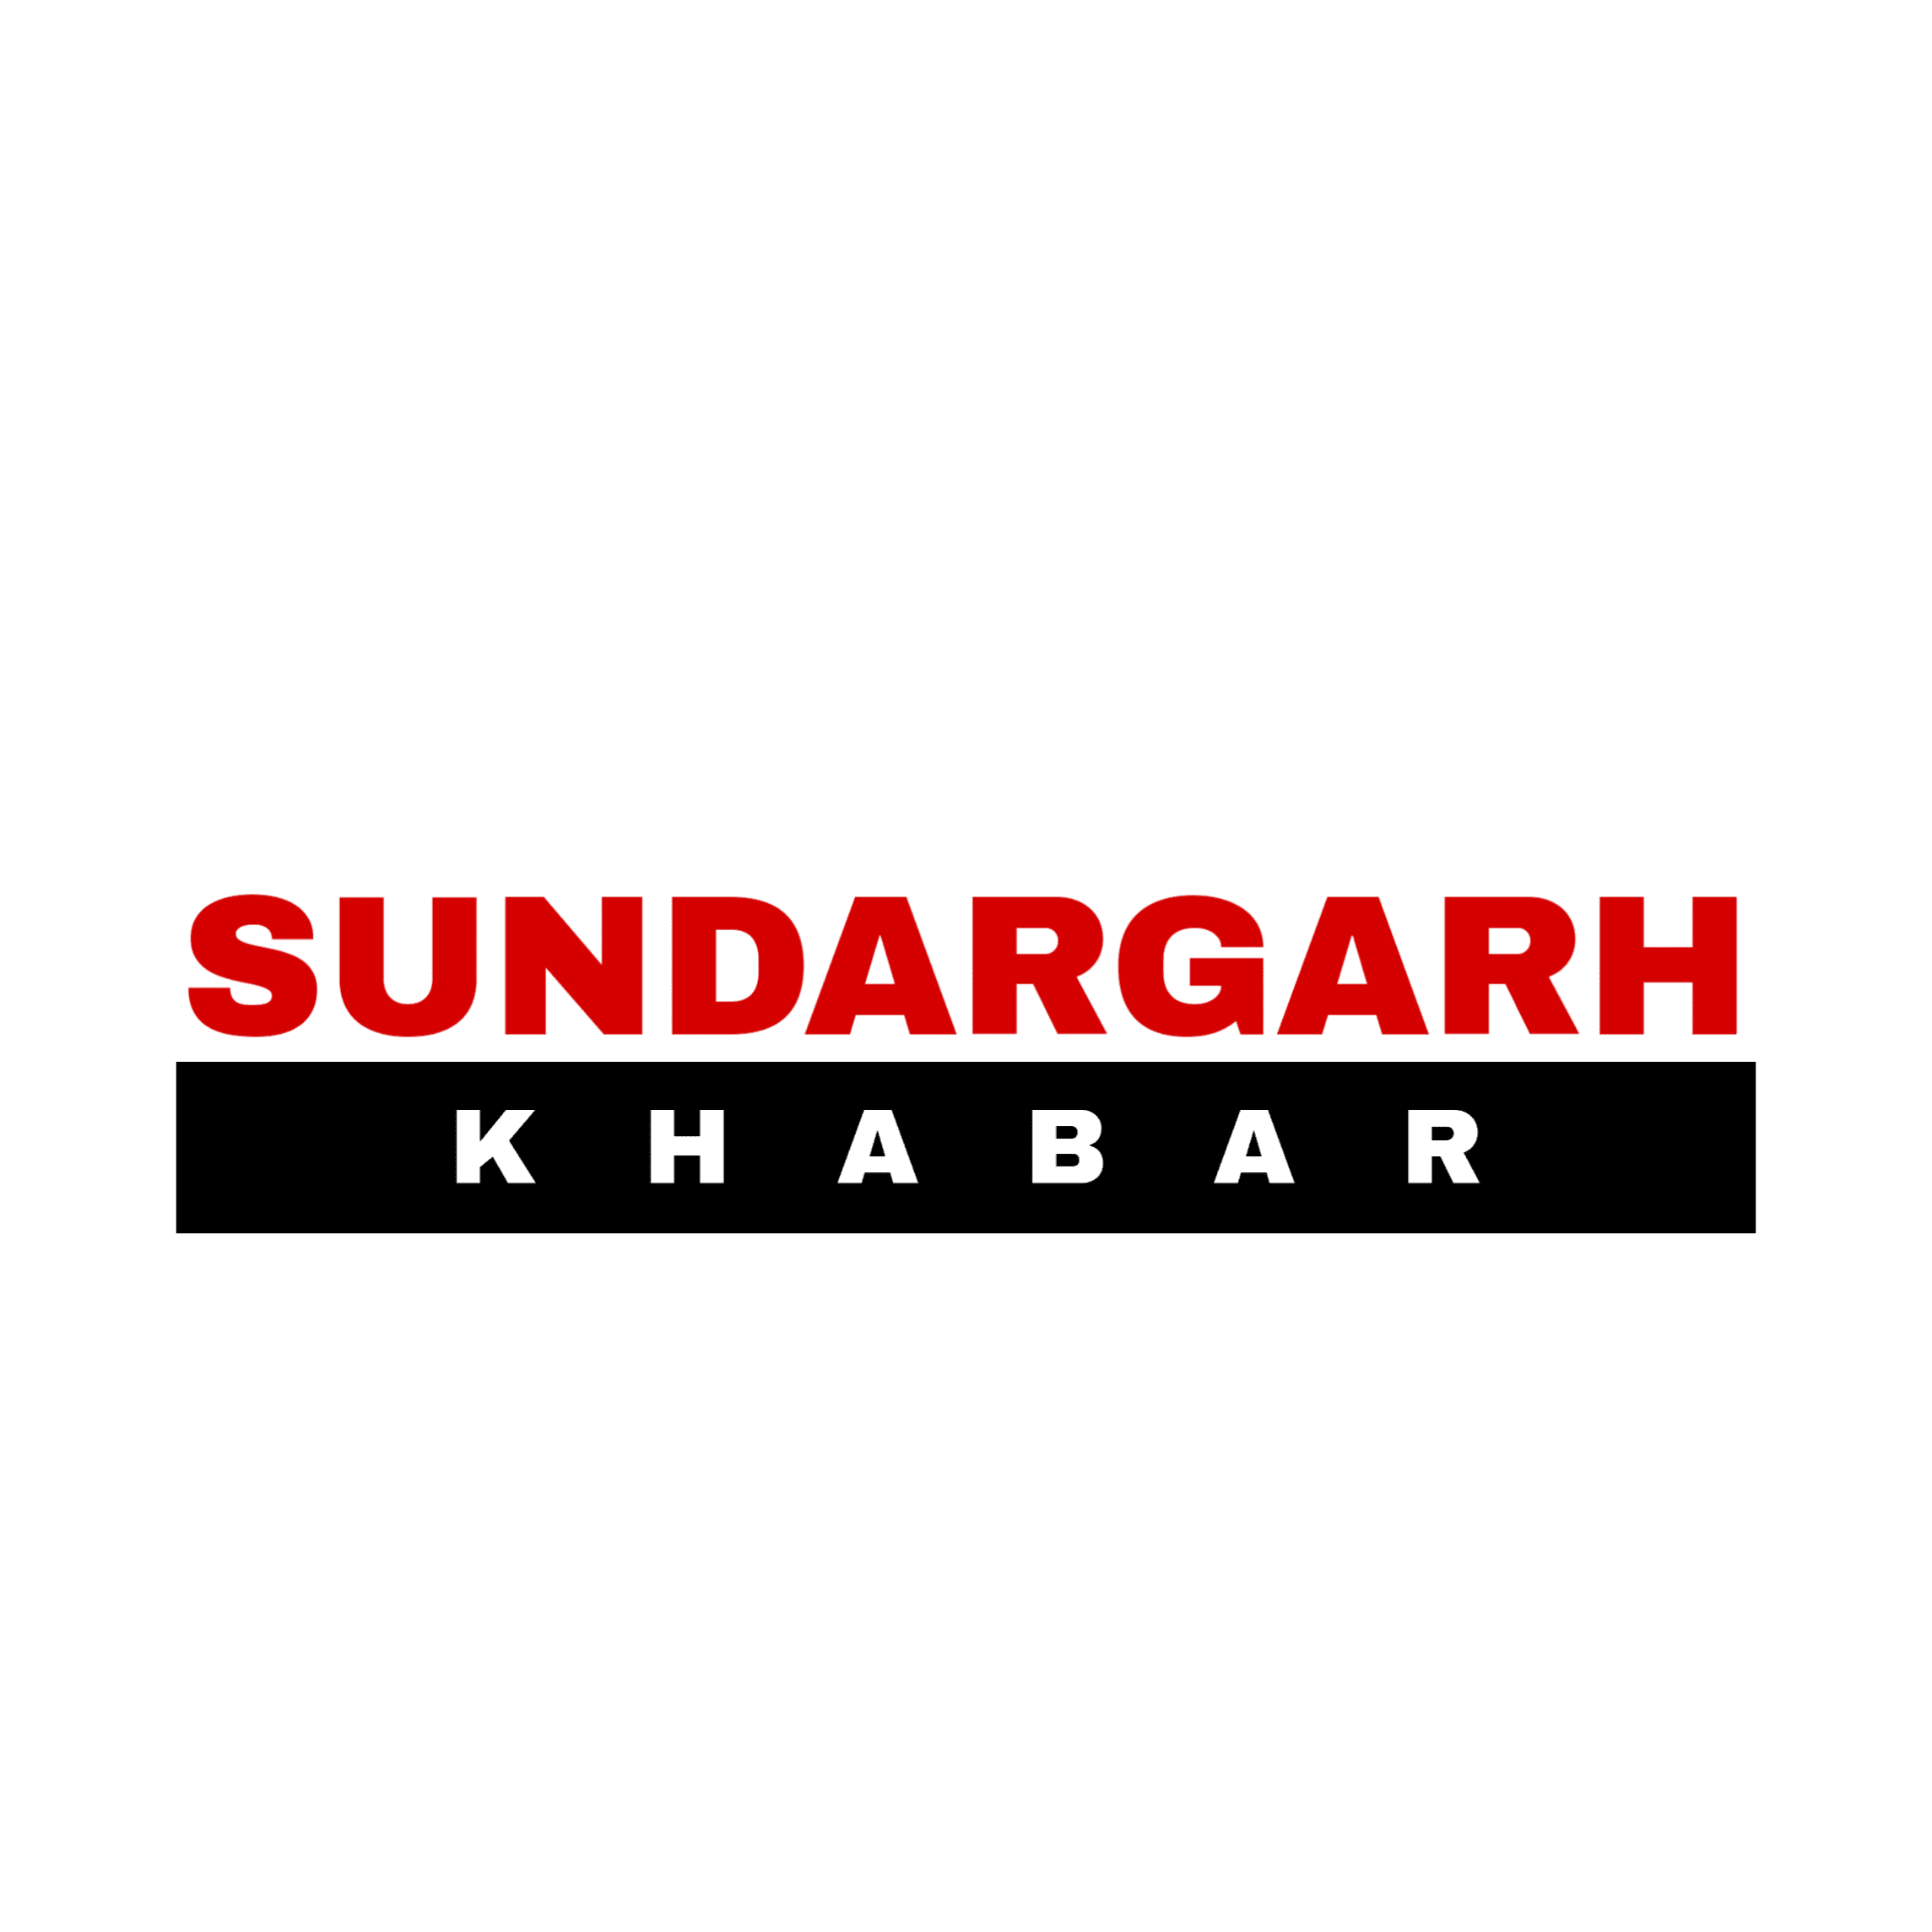 Sundargarh Khabar